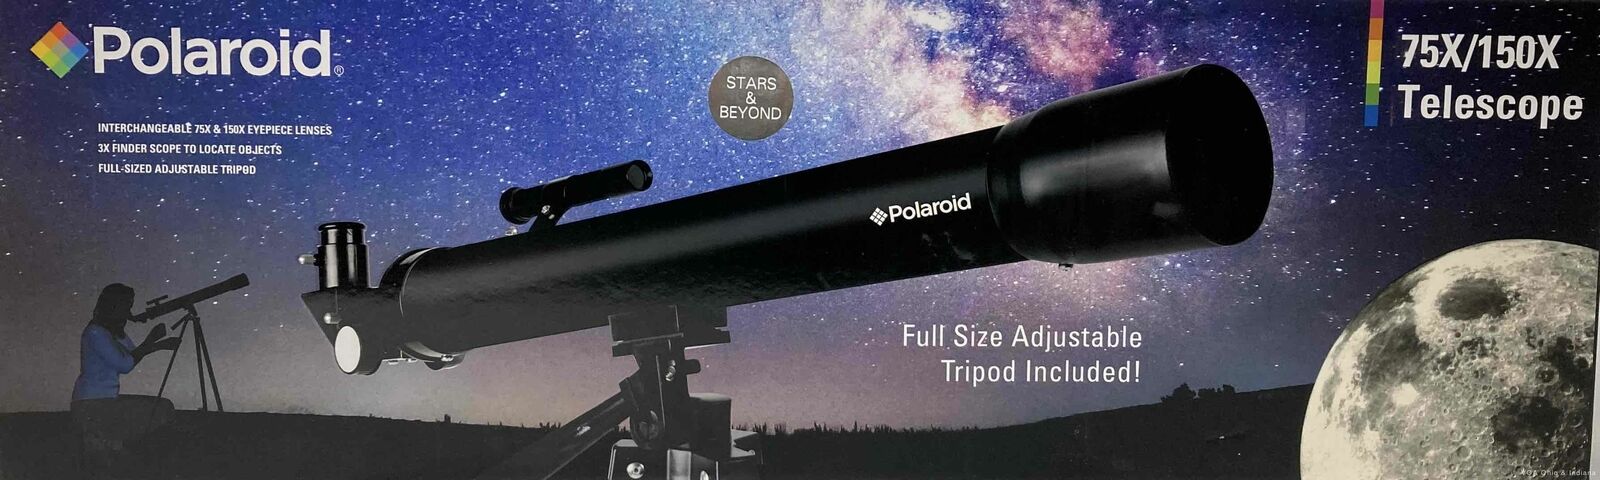 NEW Polaroid 75x/150X Telescope 